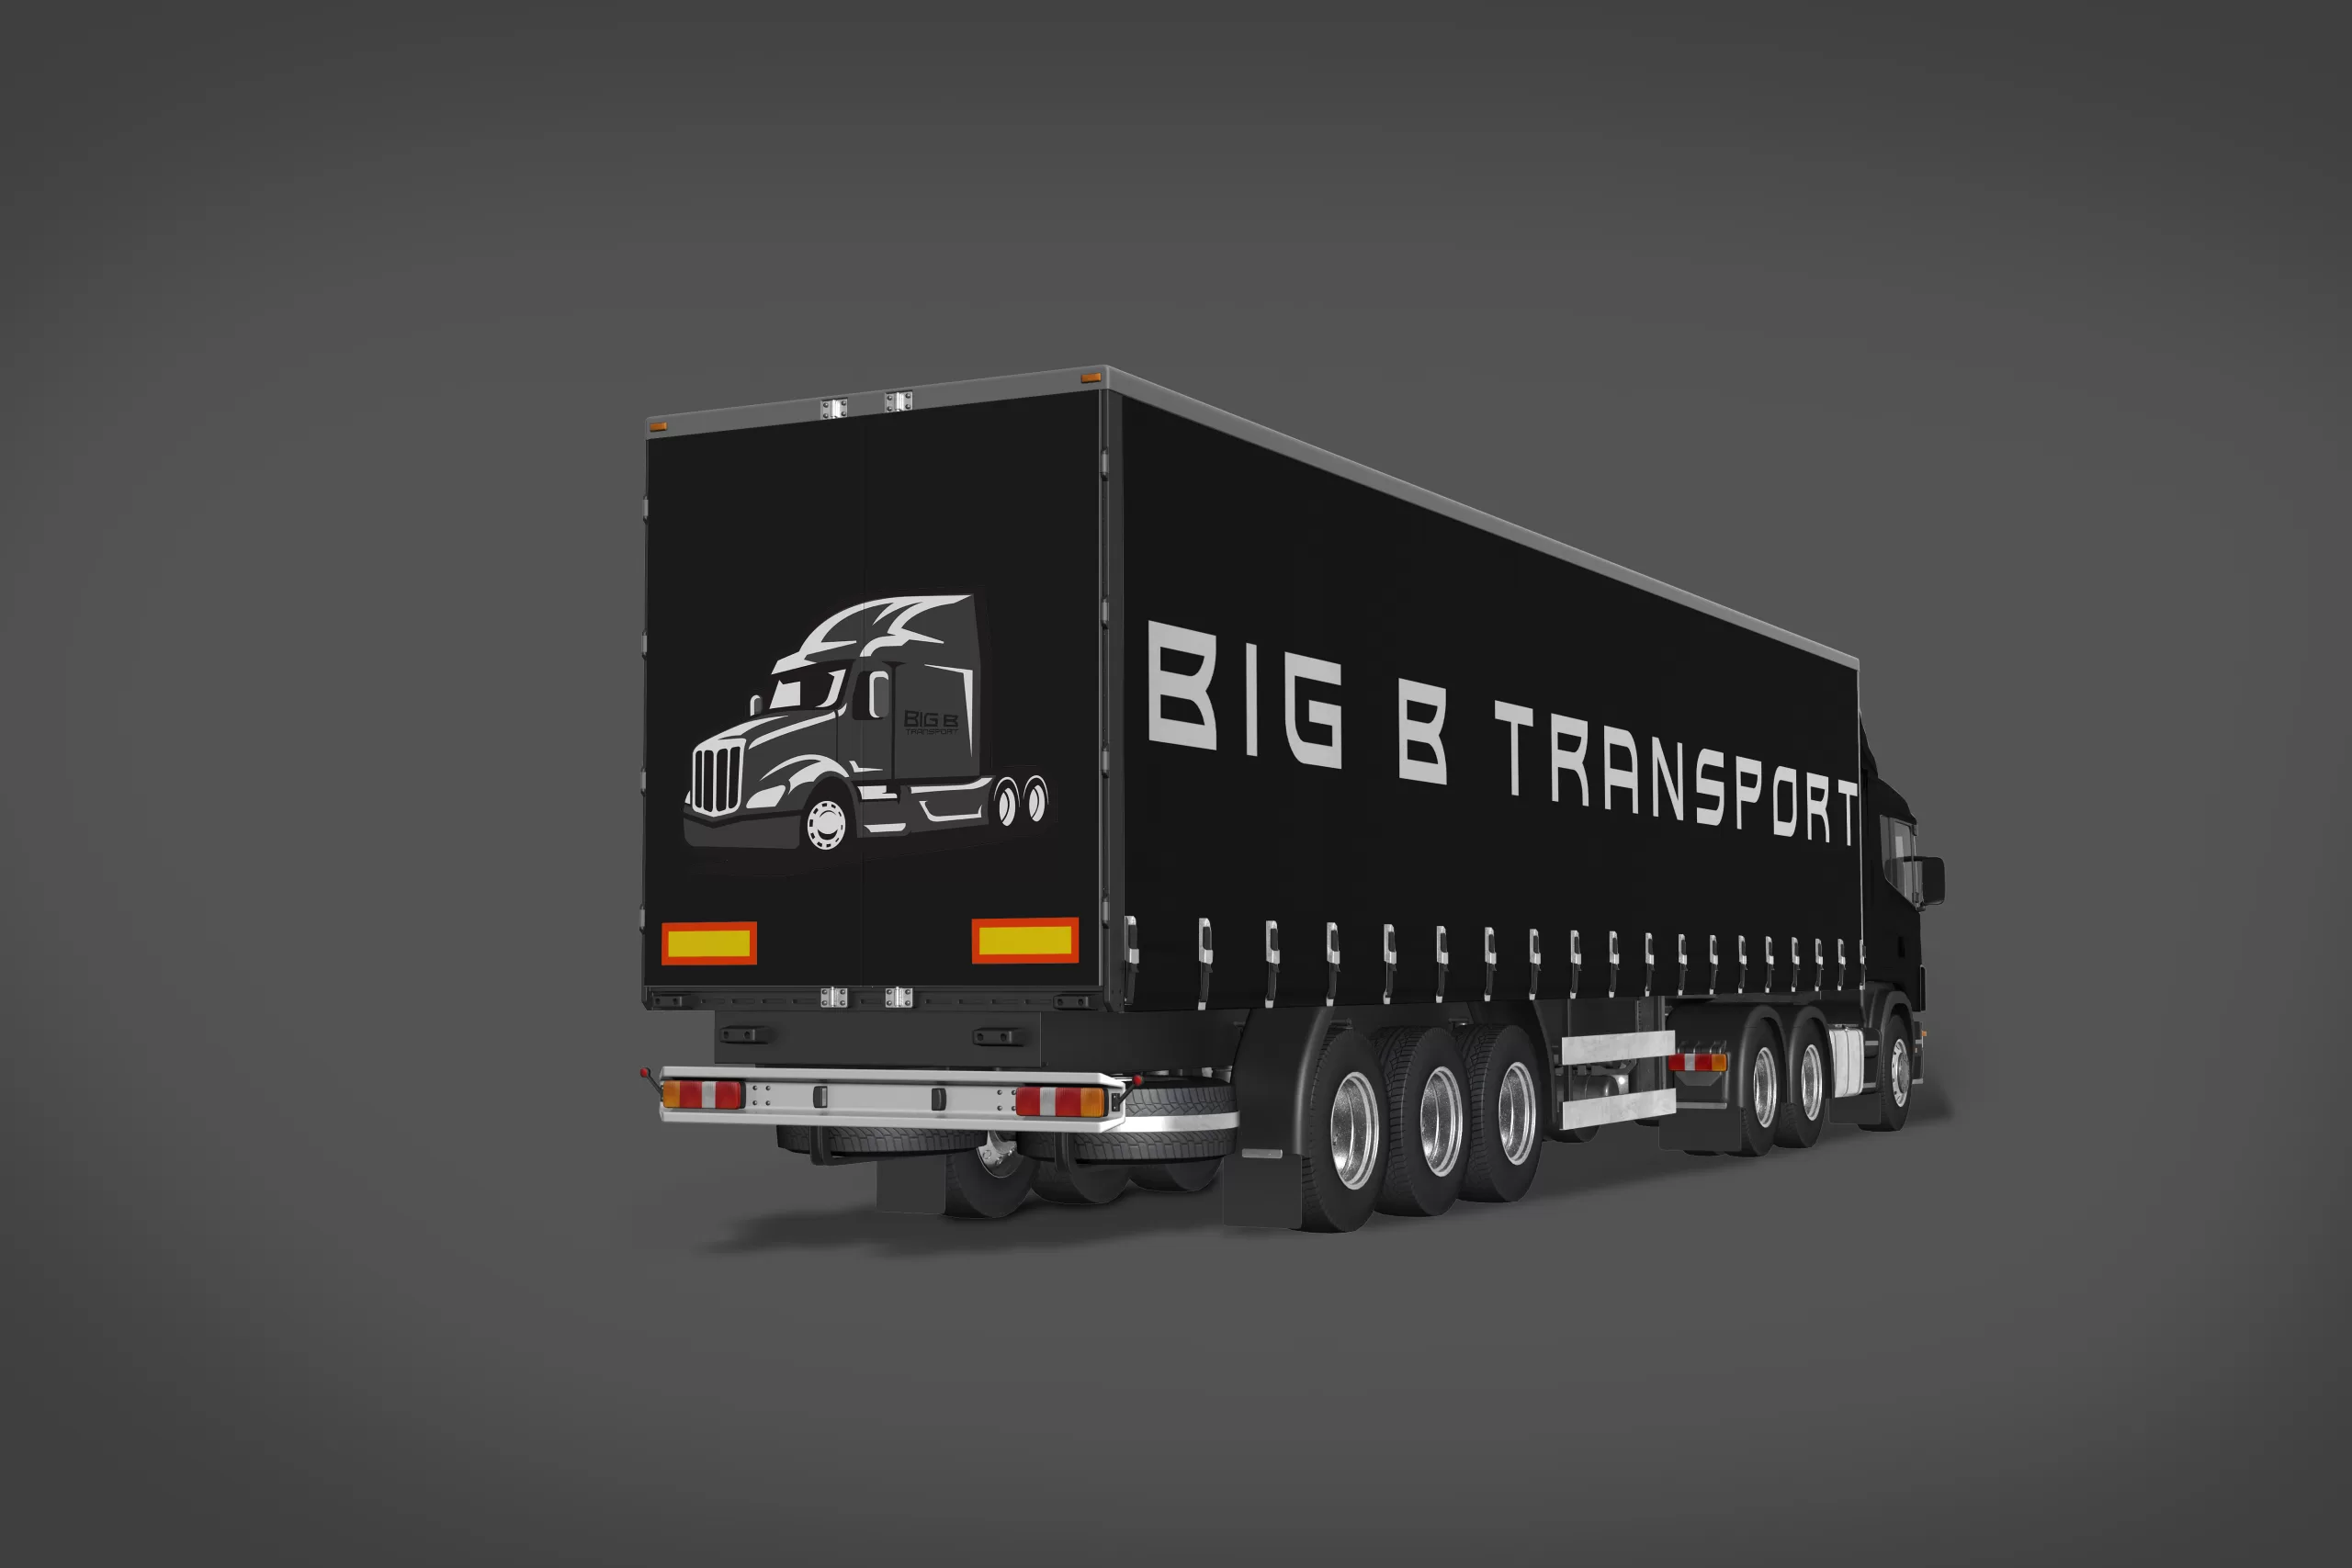 Big B Transport Mockup 2 scaled